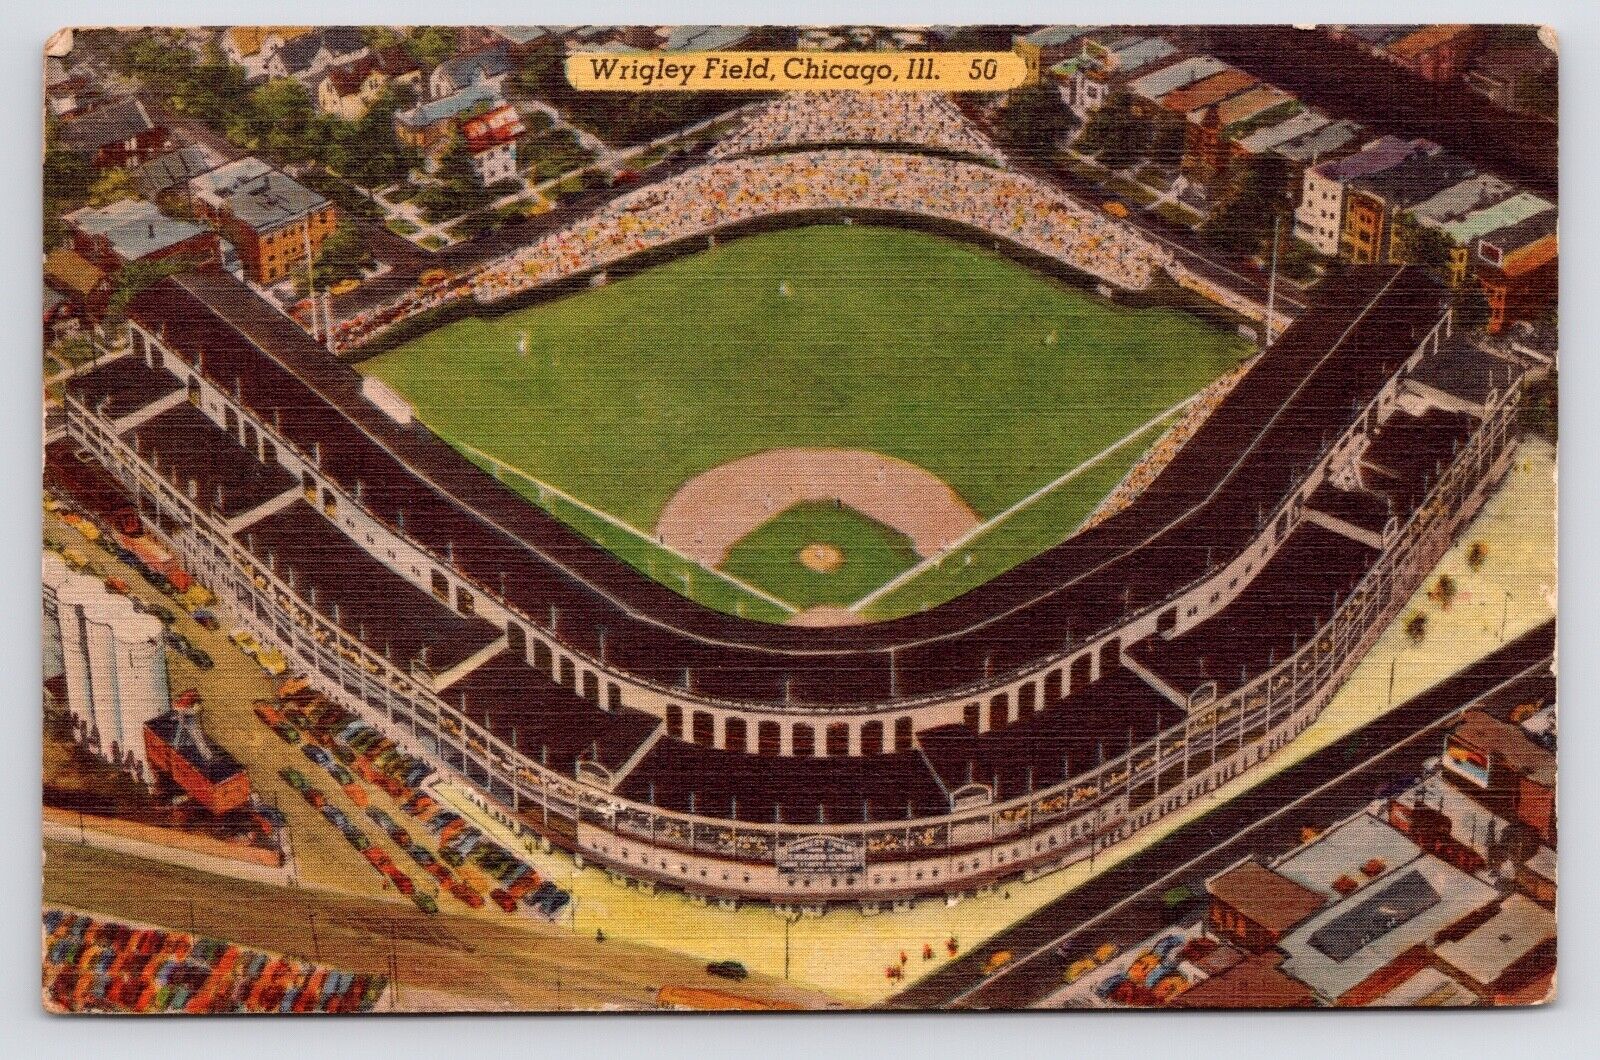 c1940s Wrigley Field Stadium Aerial View Baseball Chicago Illinois IL Postcard